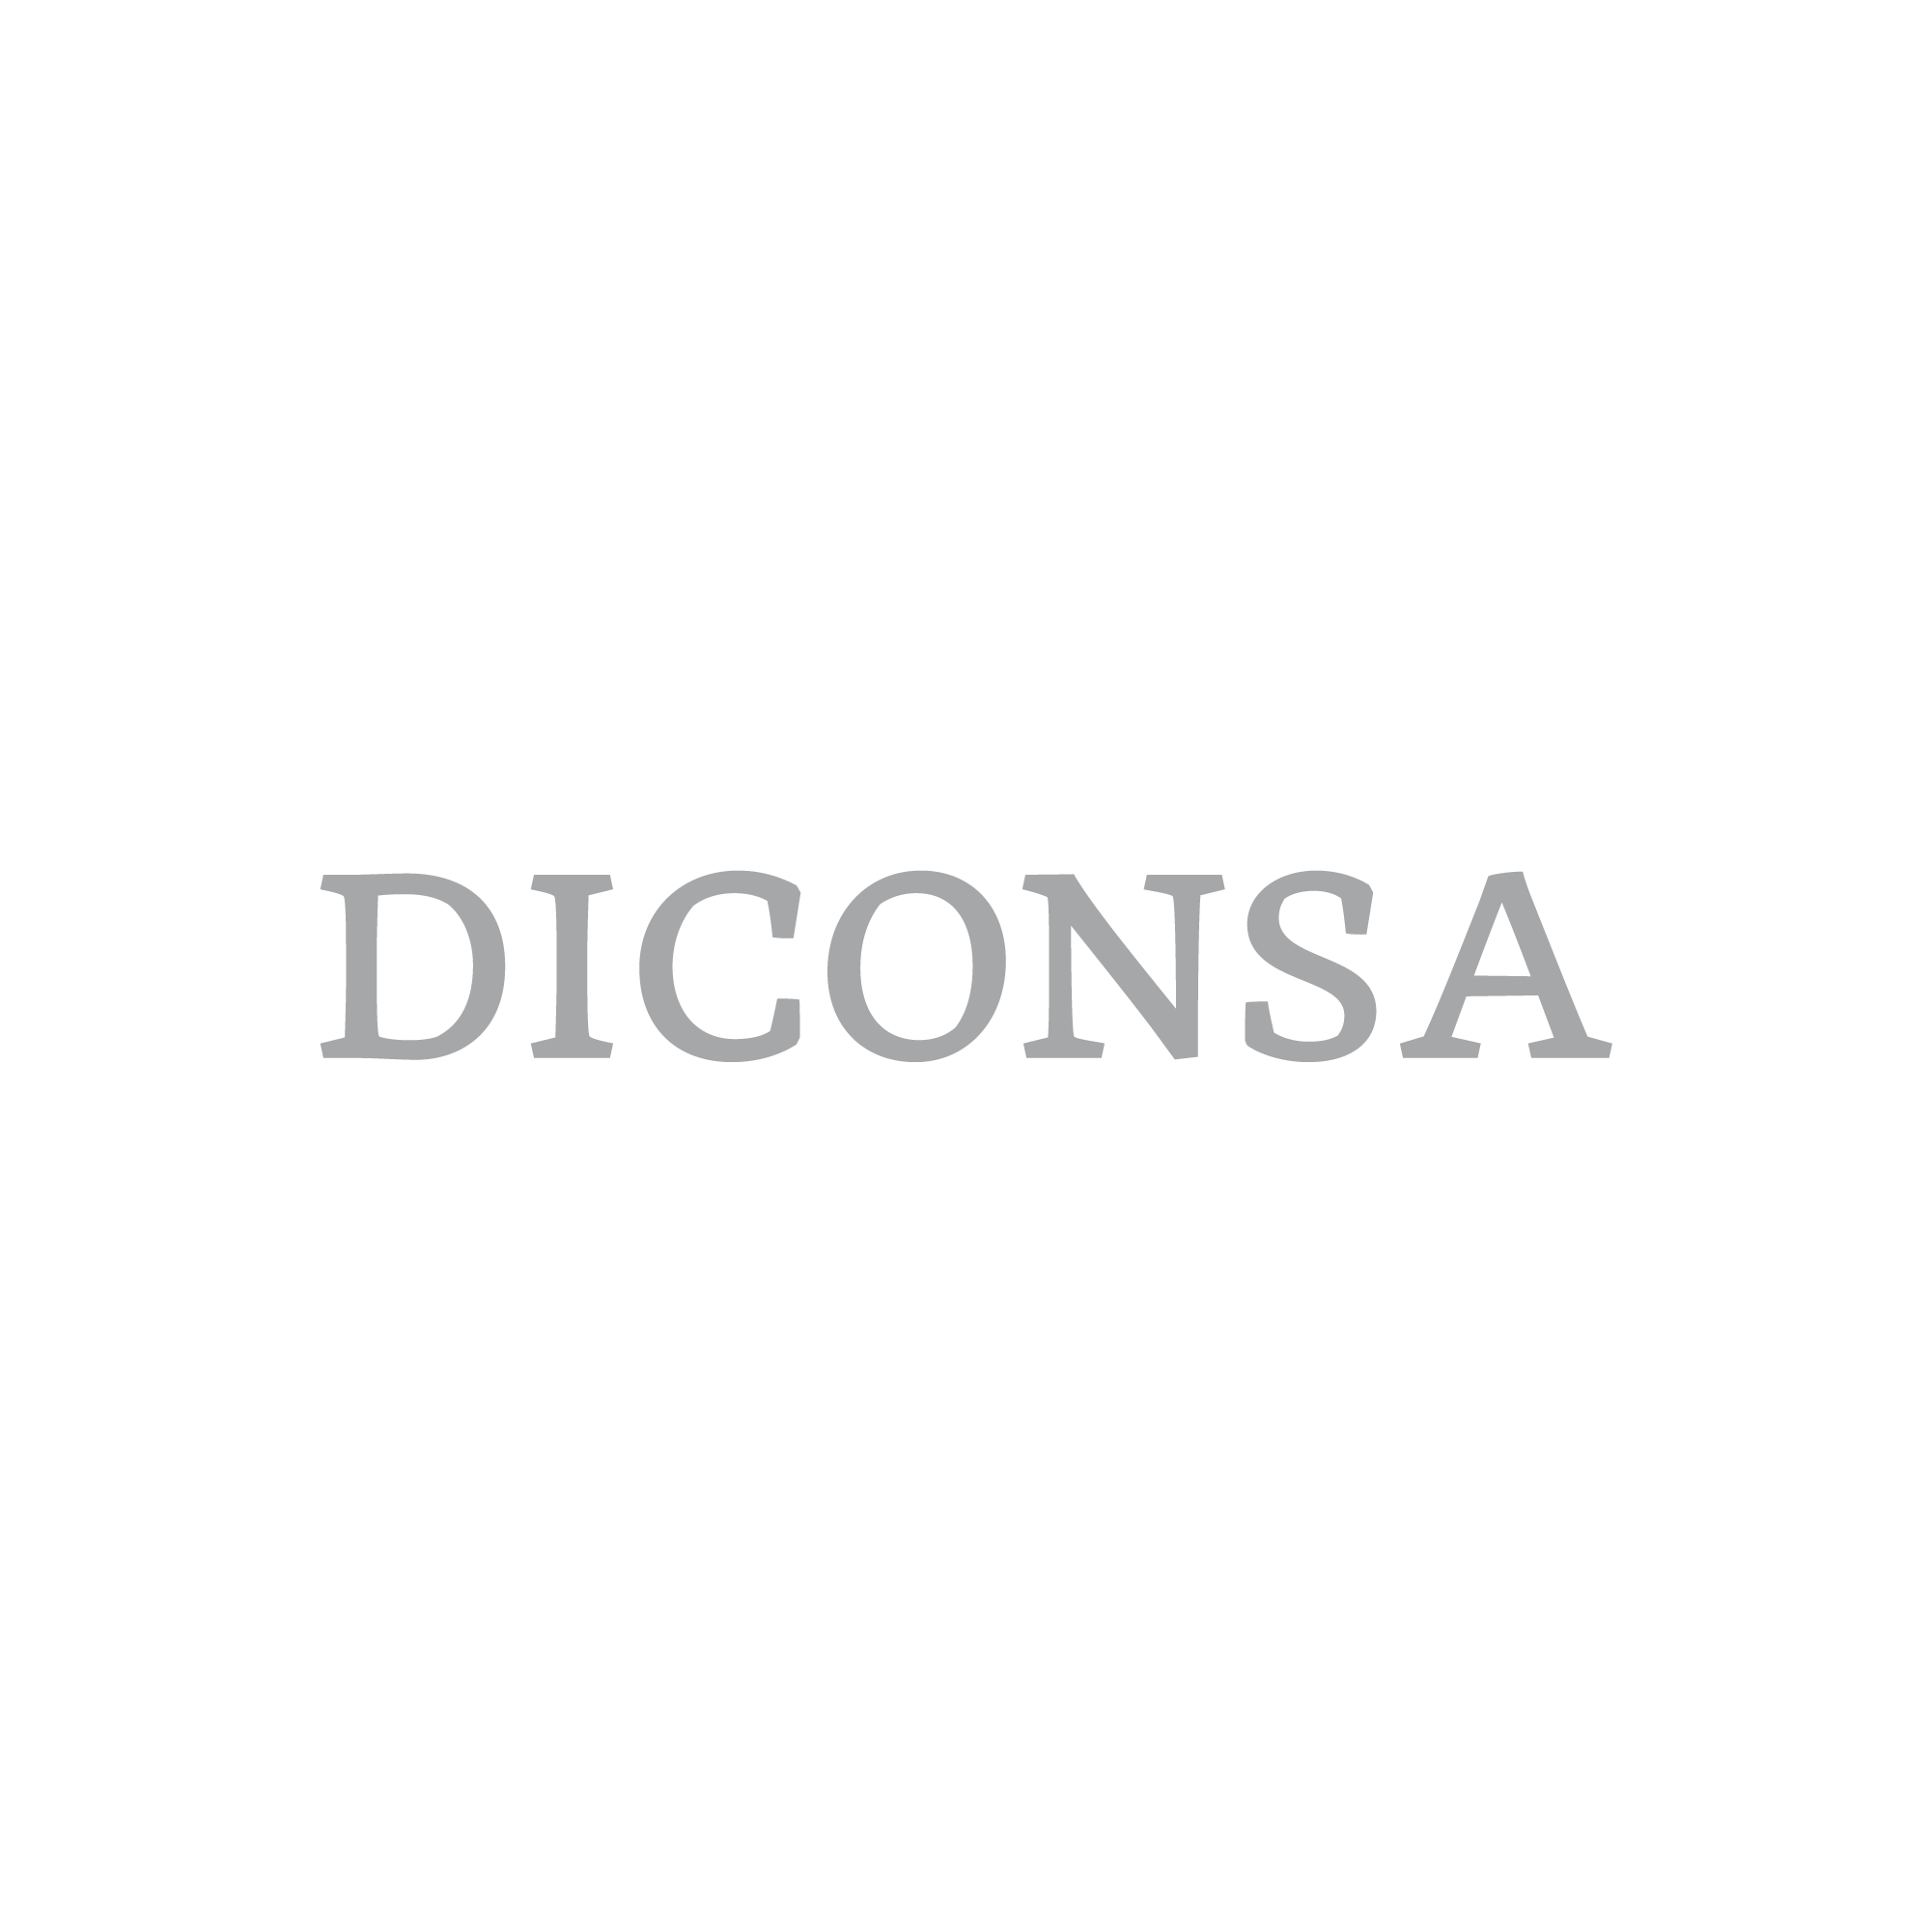 Diconsa